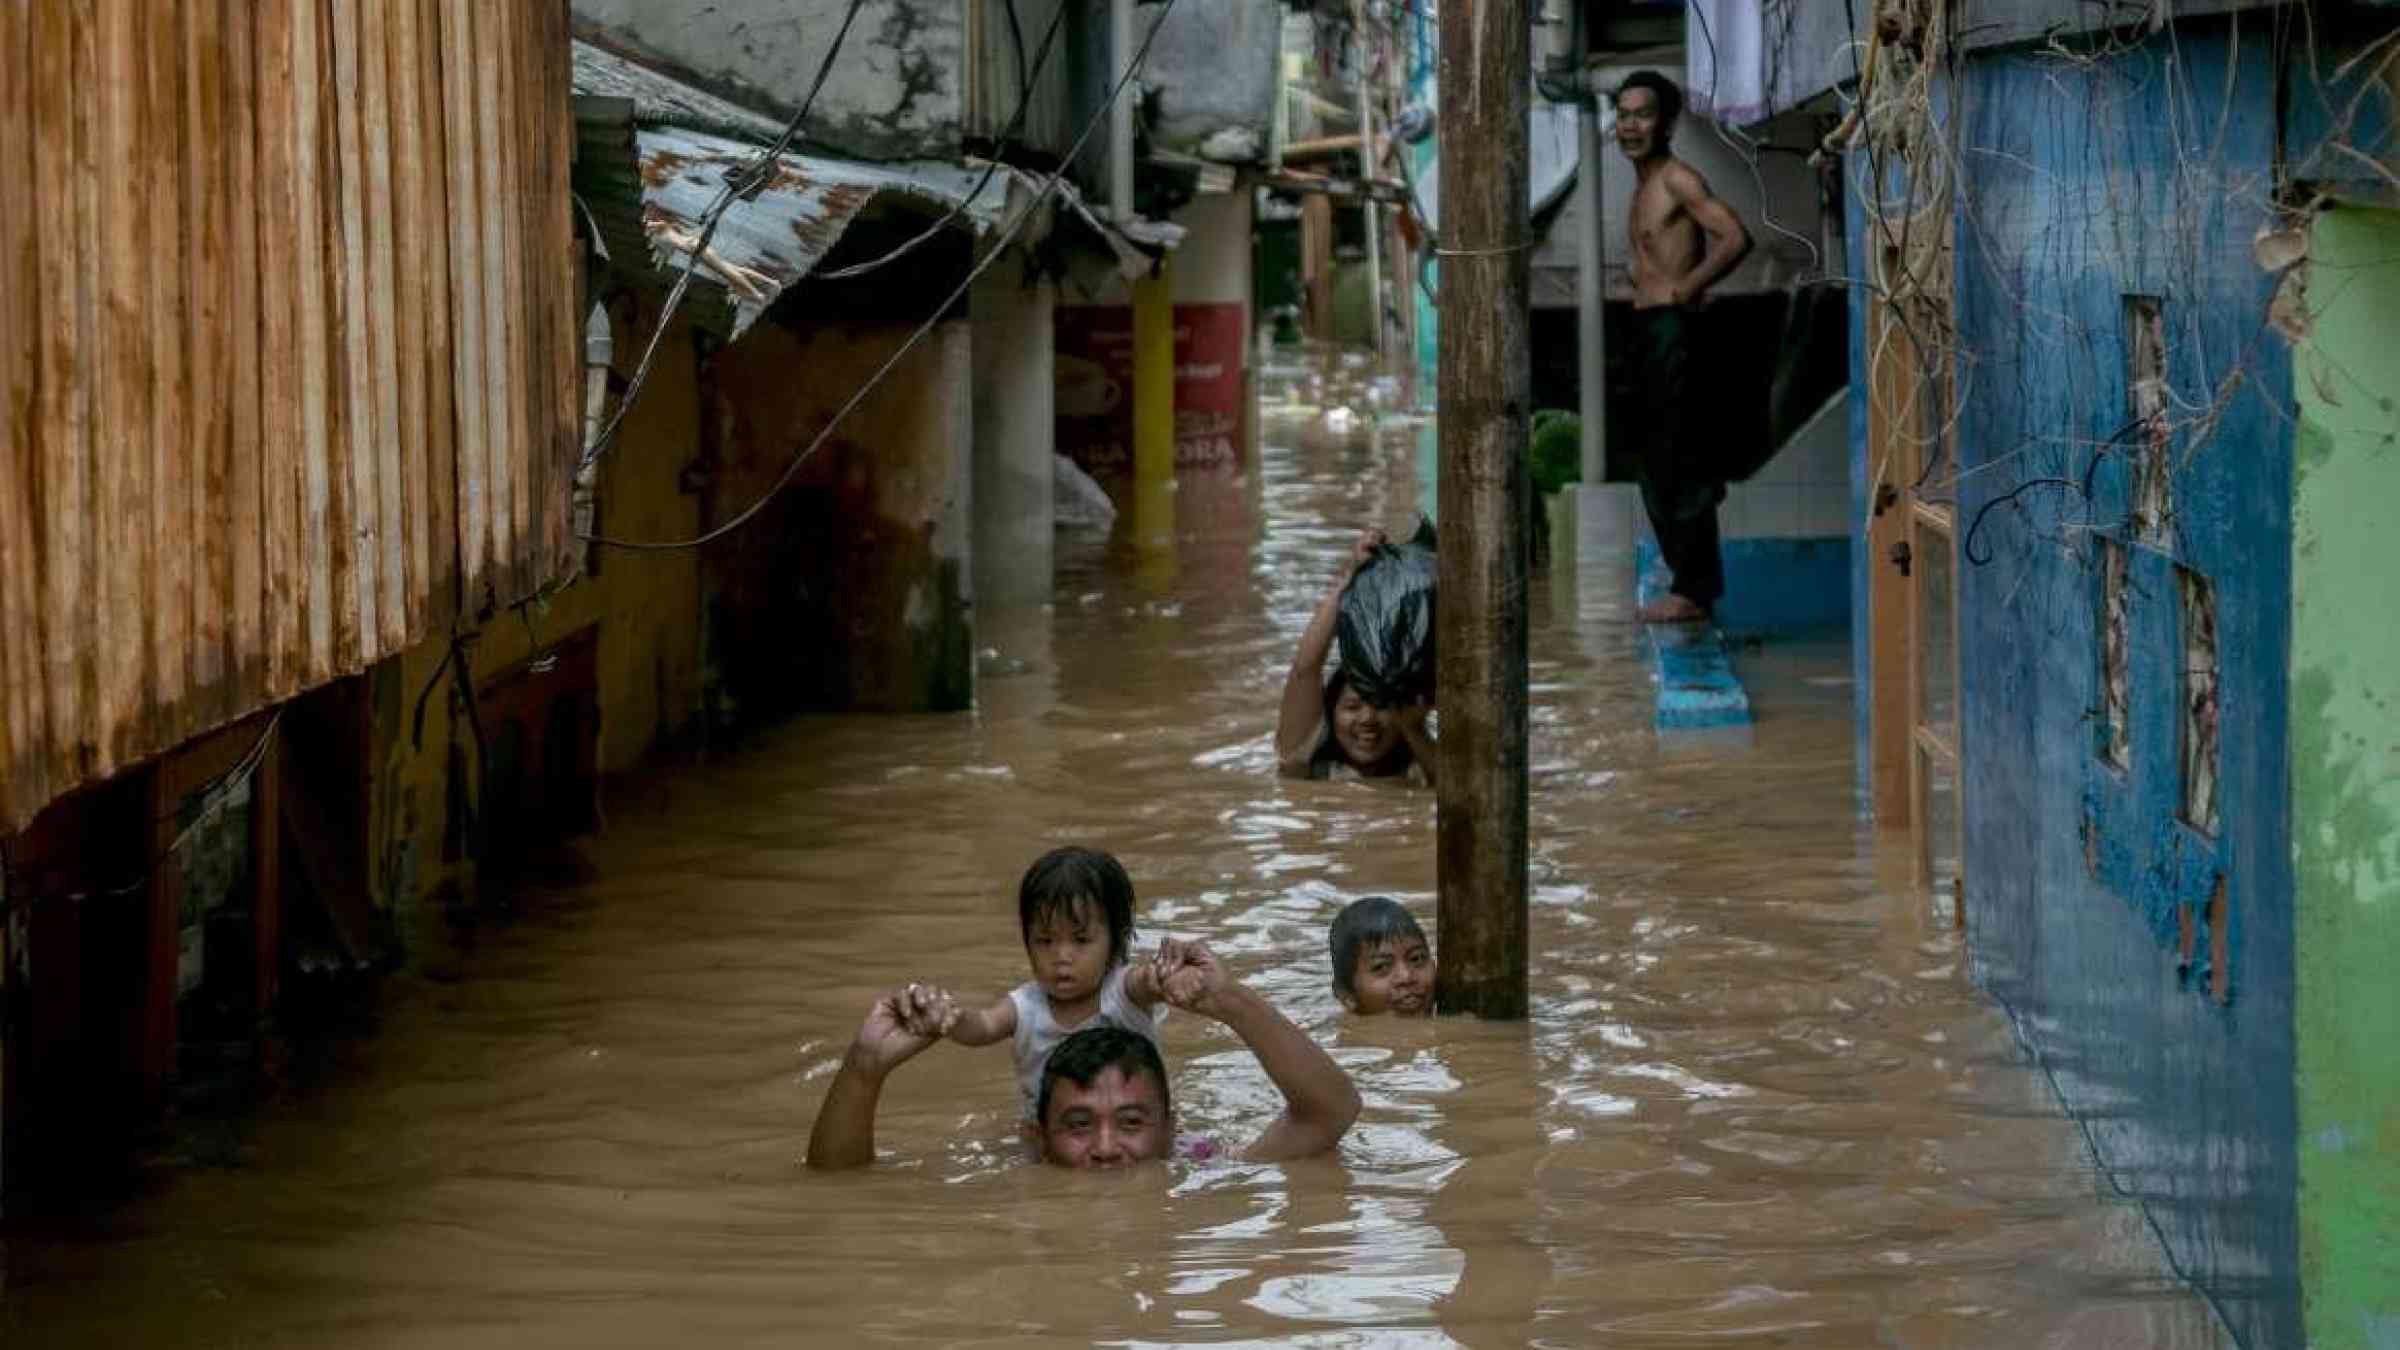 Flood in Jakarta, Indonesia. Ares Jonekson / Shutterstock.com